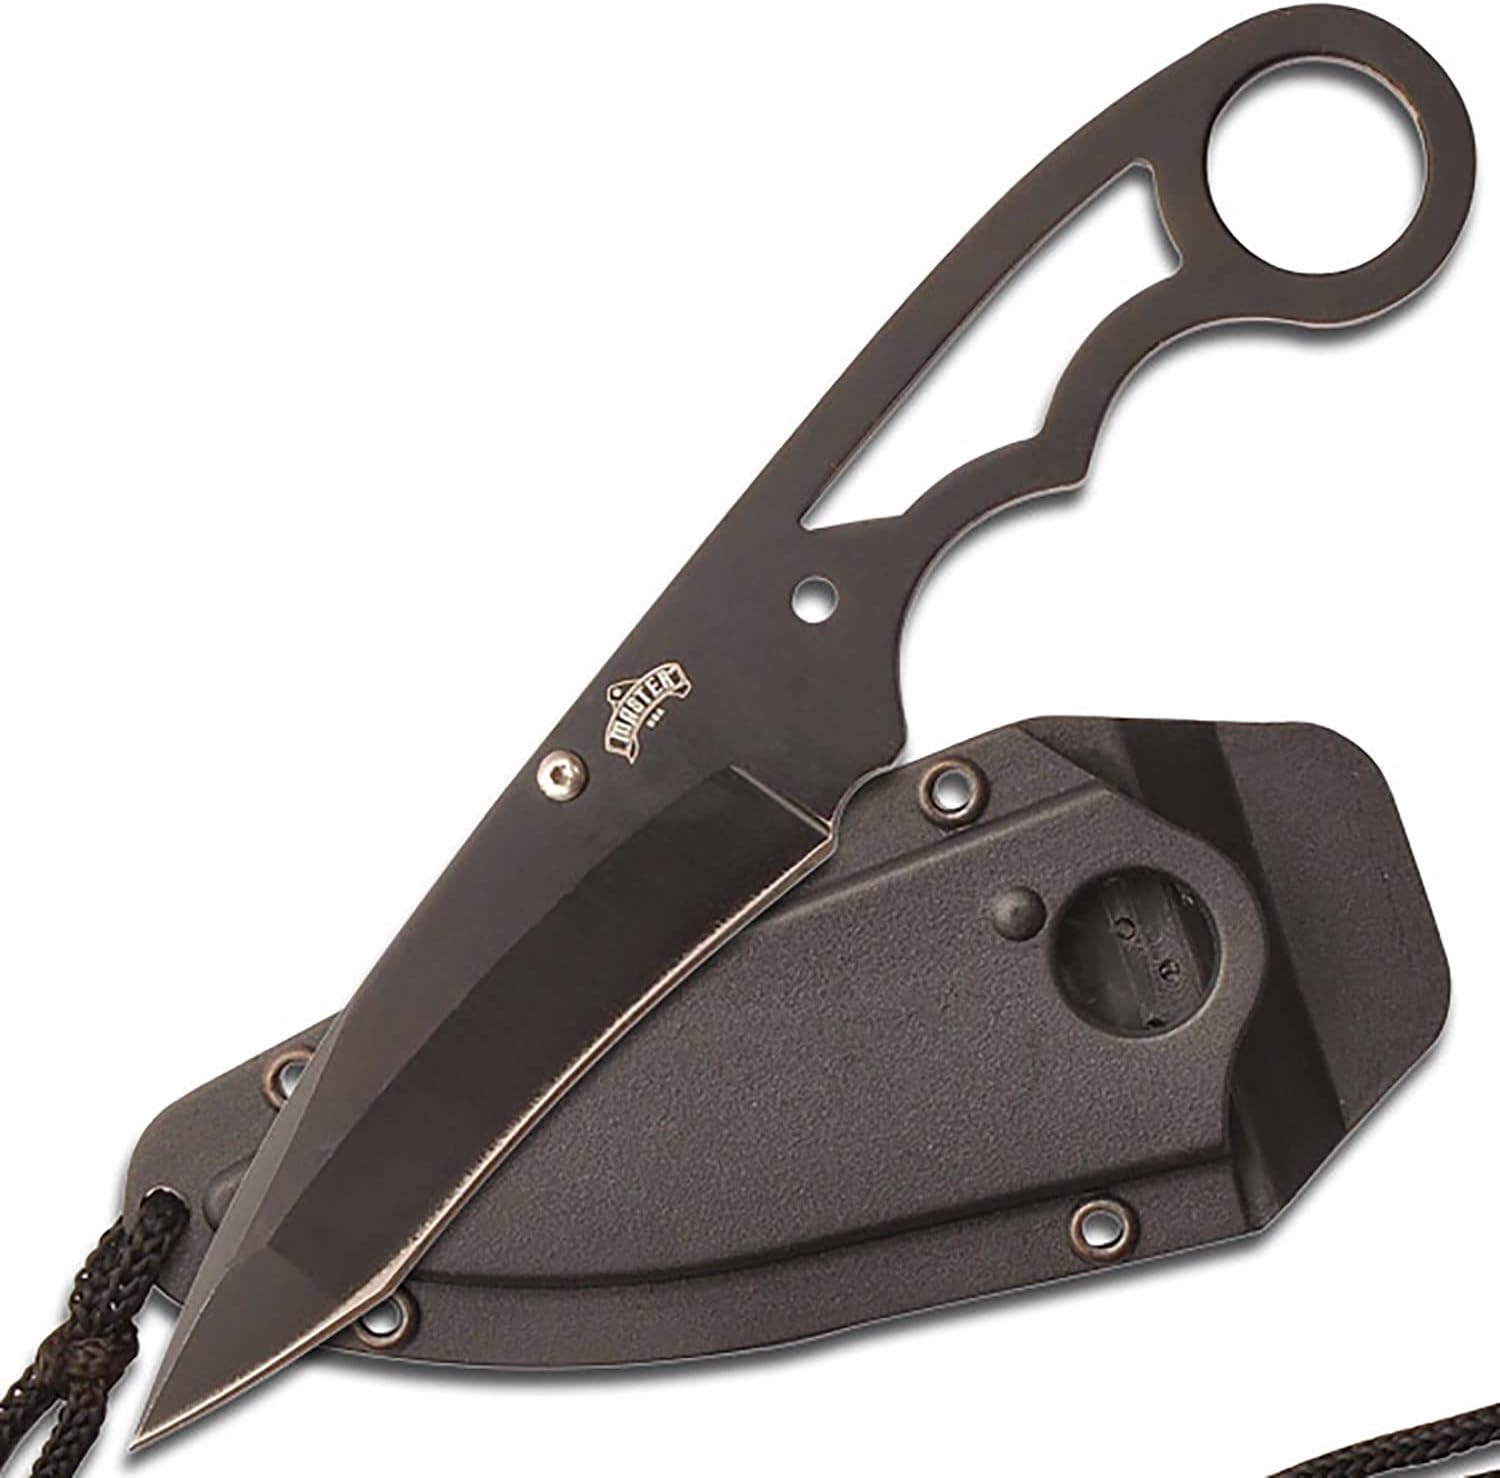 Full Tang Tactical Blade Neck Knife With Hard Case - Black  MU-1119BK